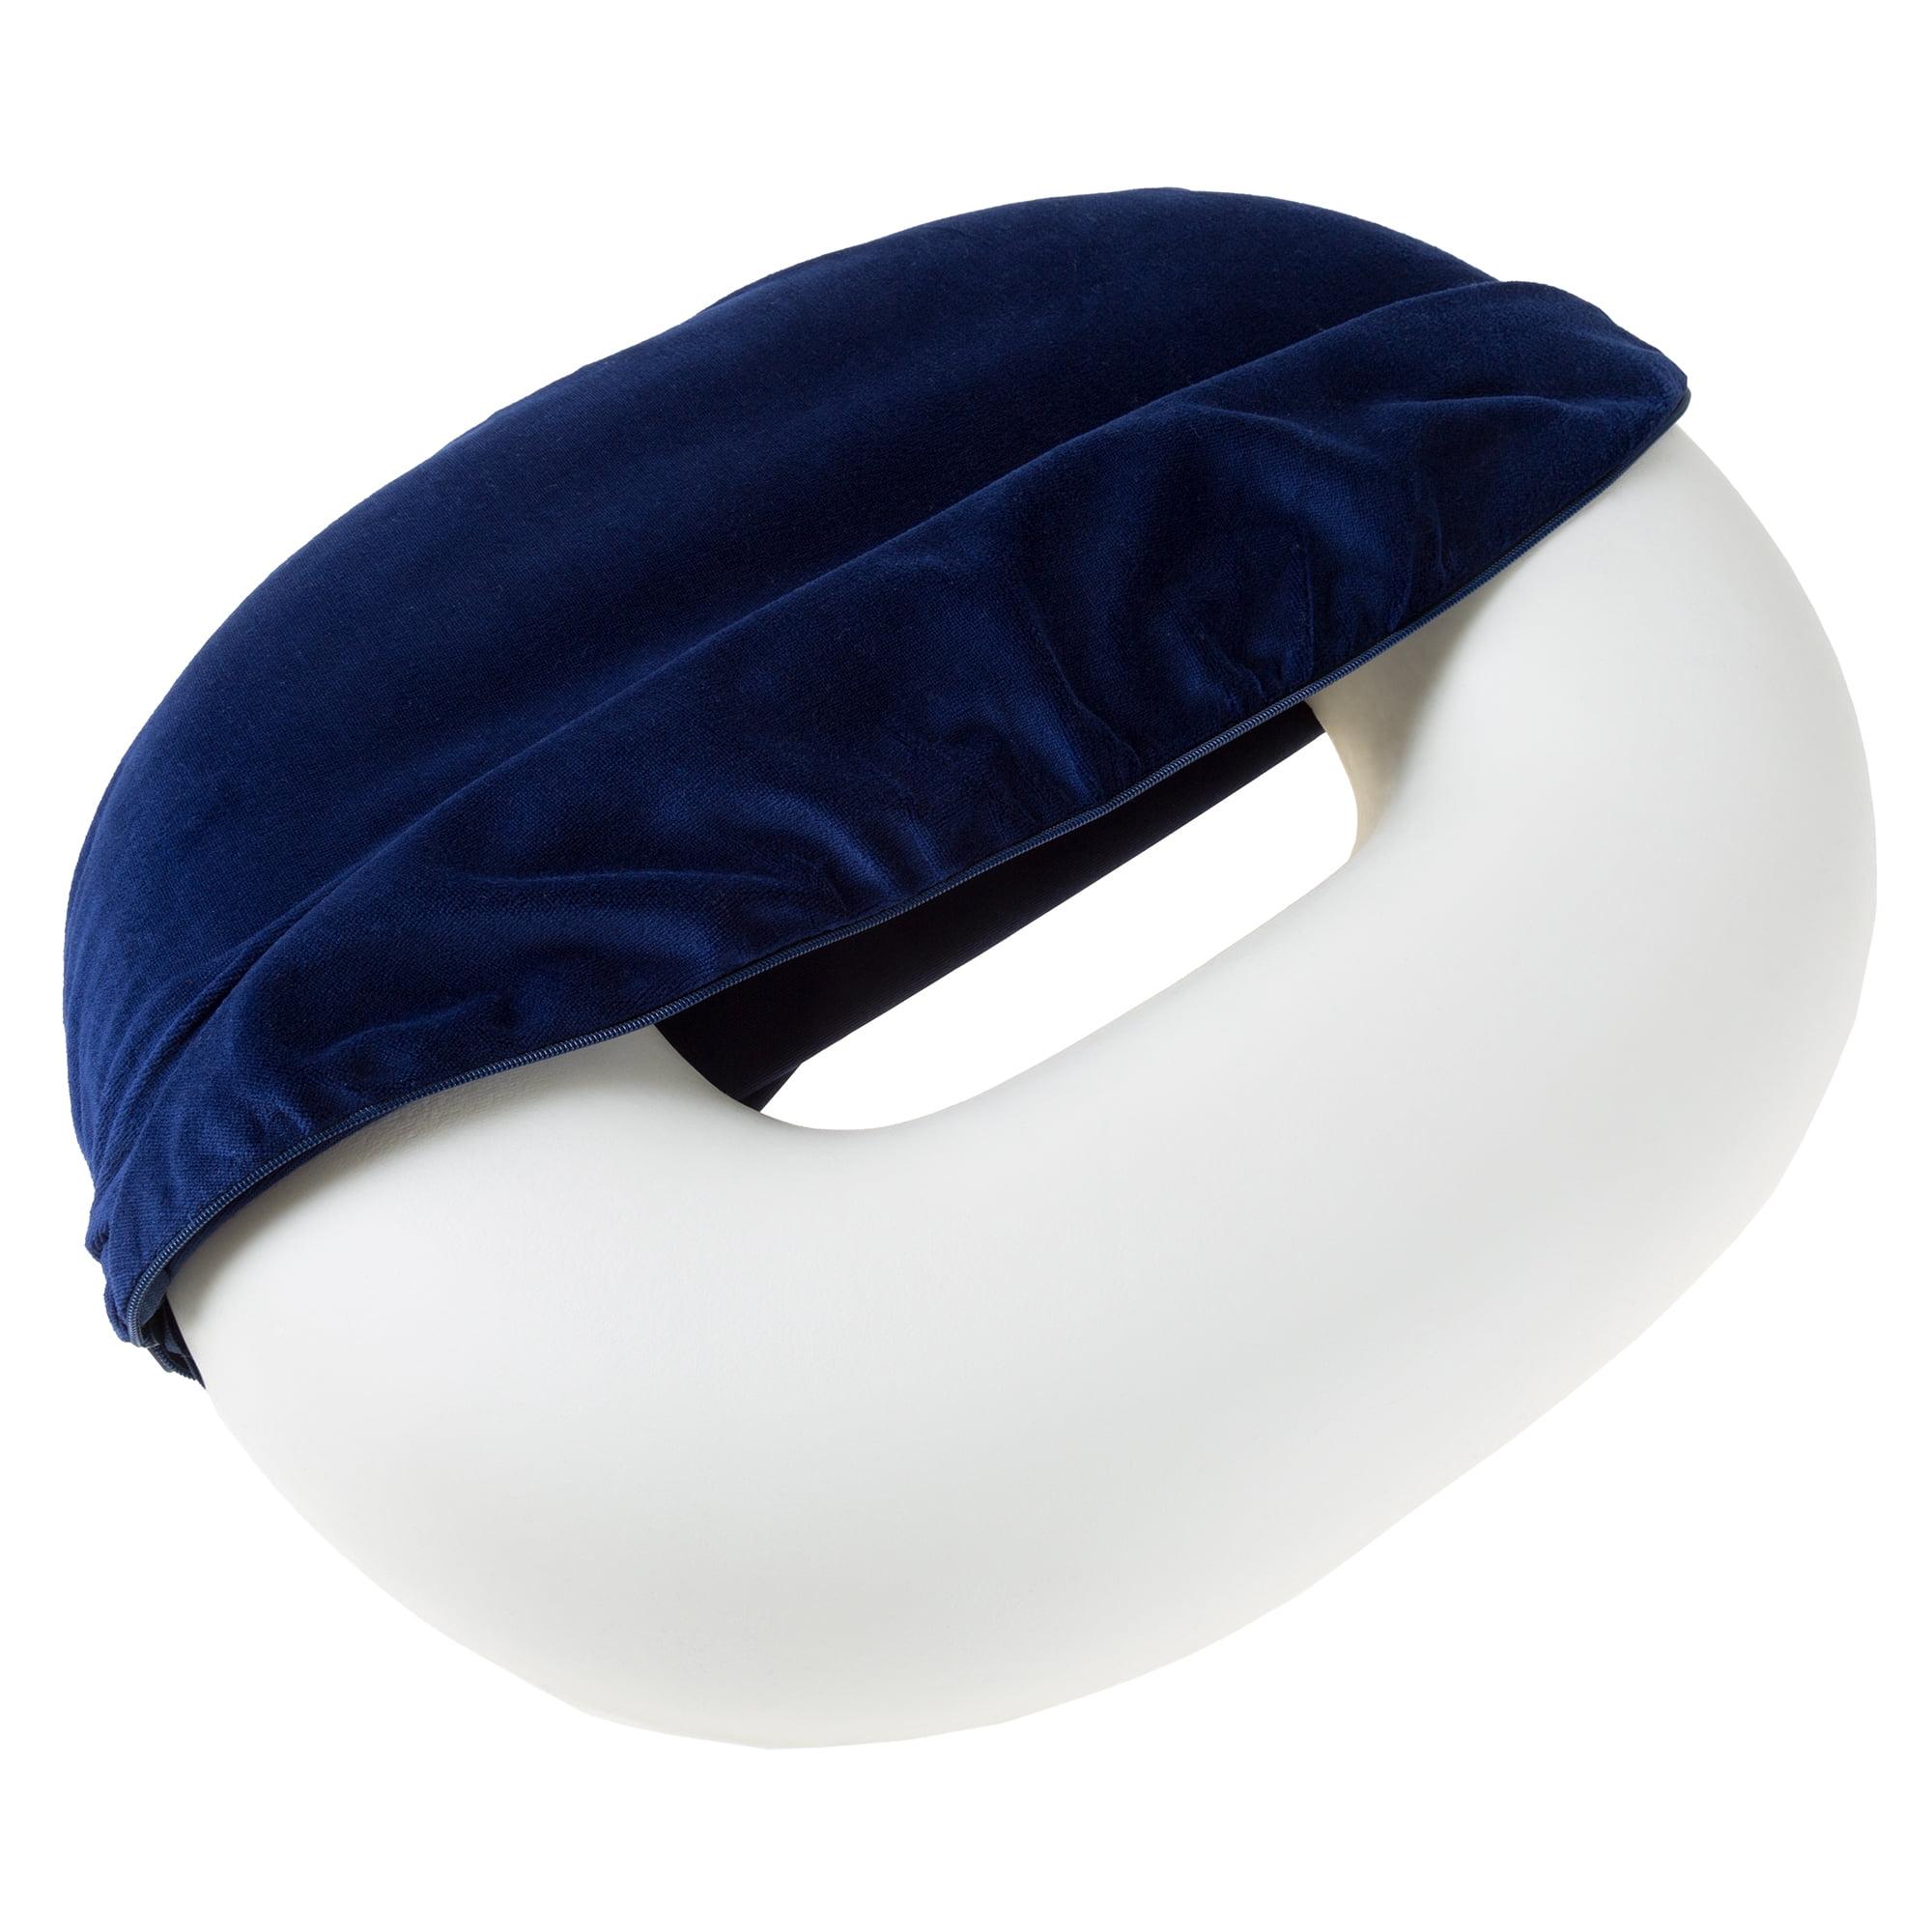 DR.Flink Donut Pillow Seat Cushion - Medical Memory Foam Tailbone Pillow -  Premium Comfort Cushion for Hemorrhoids, Prostate, Pregnancy, Post Natal